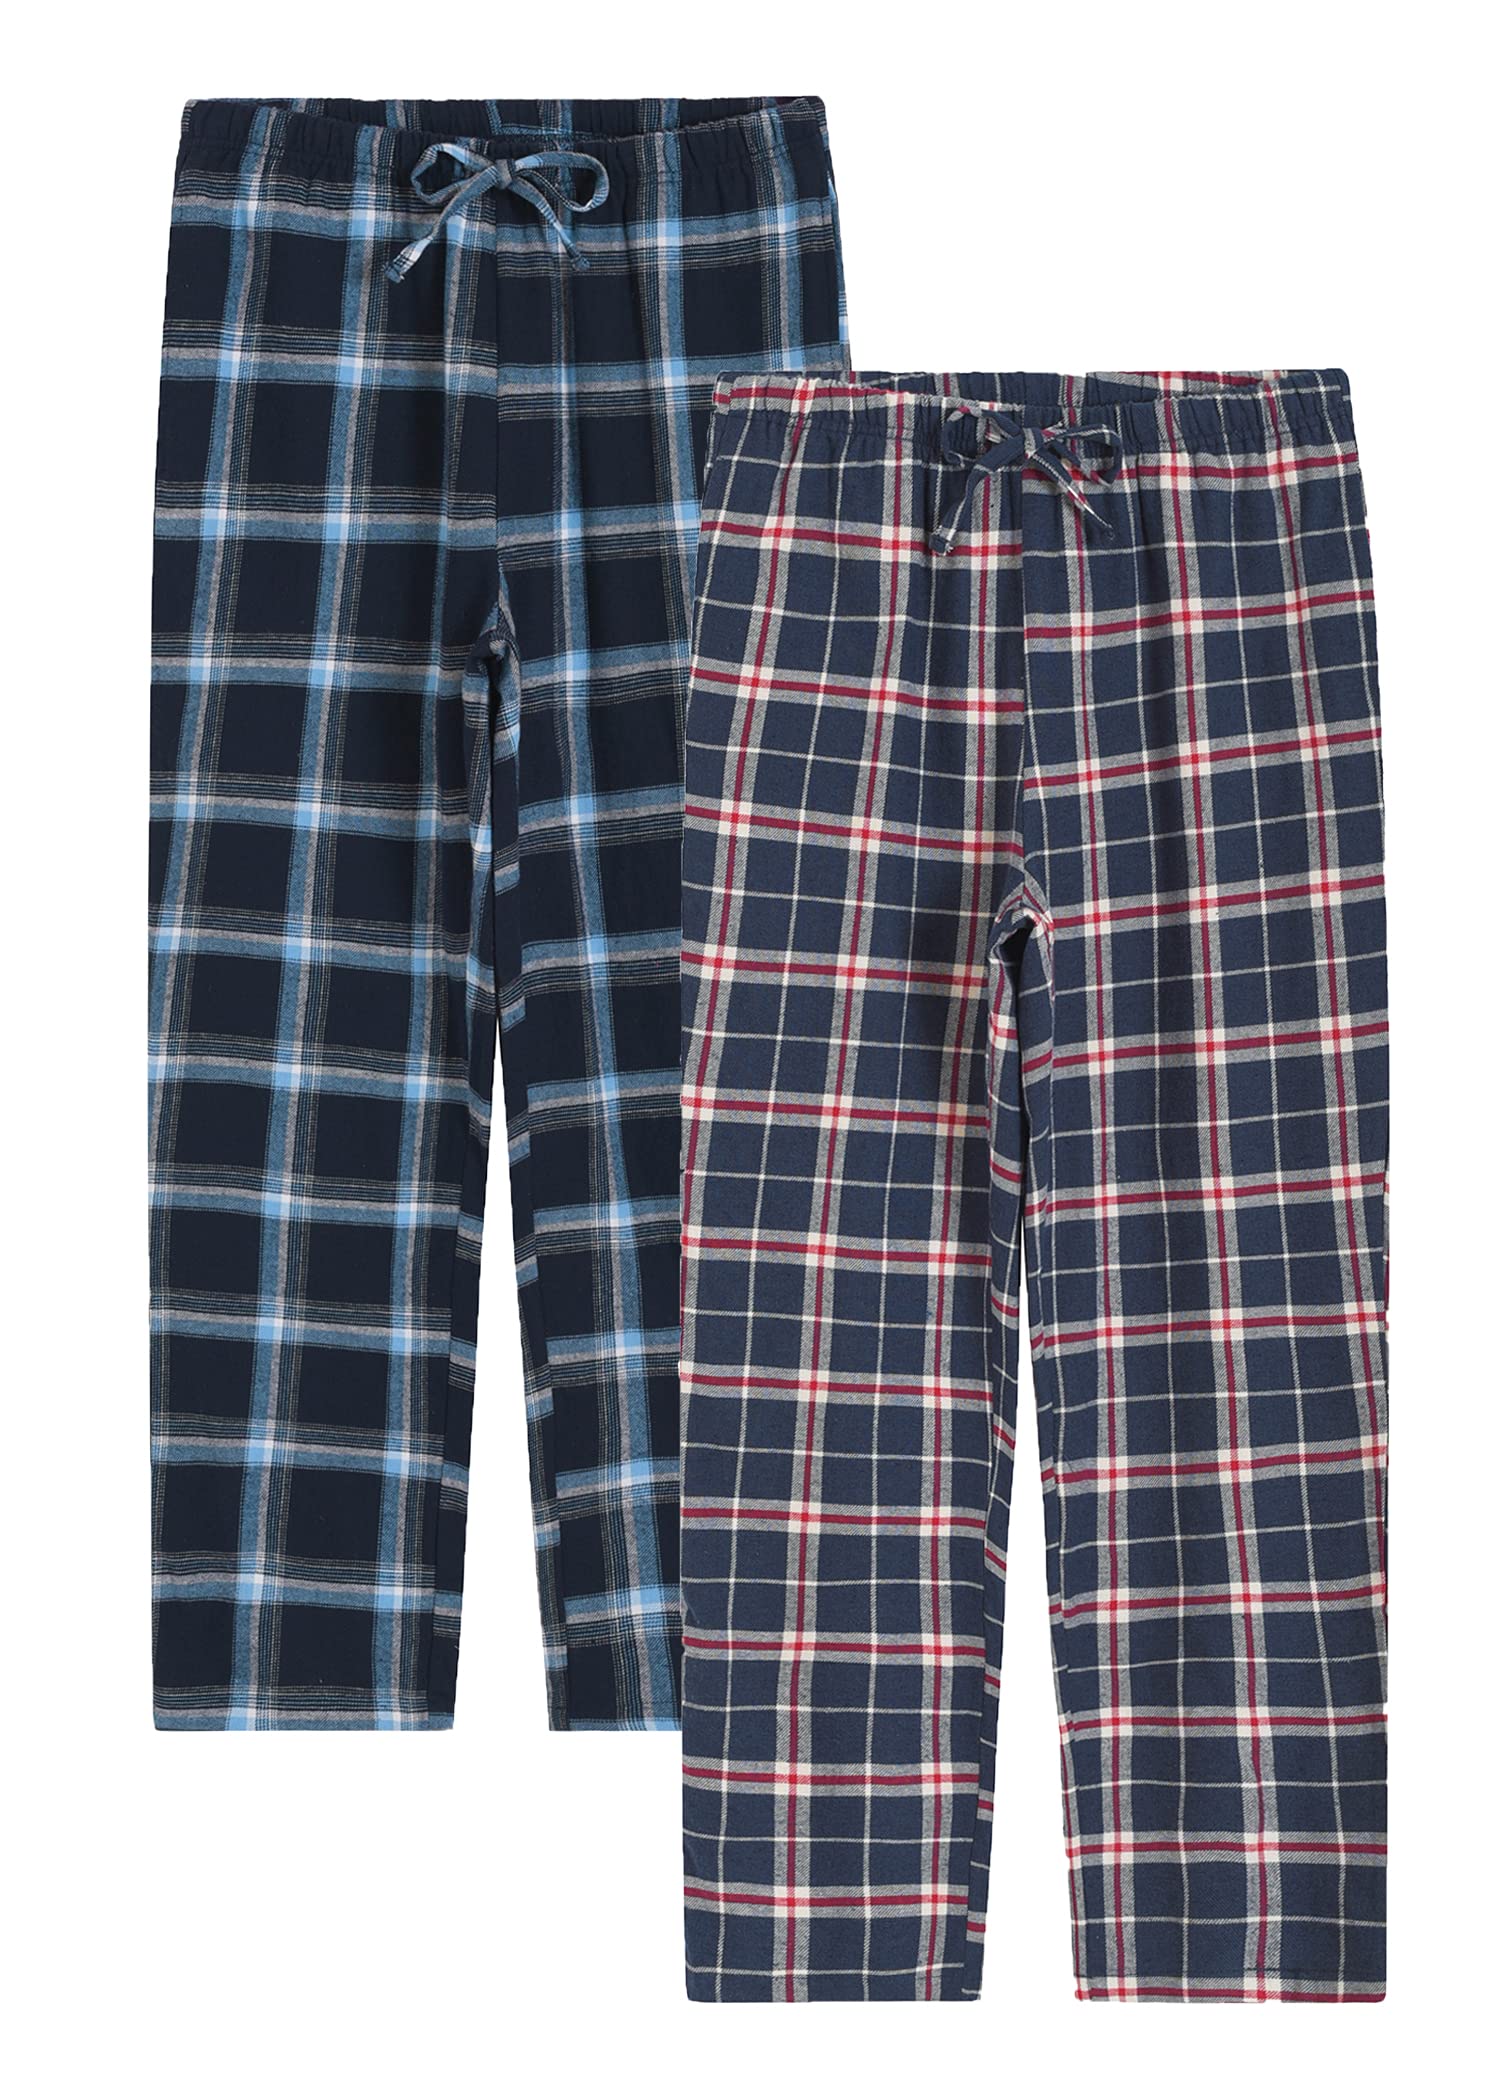 Women's Cotton Flannel Pajama Pants Plaid Pj Bottoms with Pockets